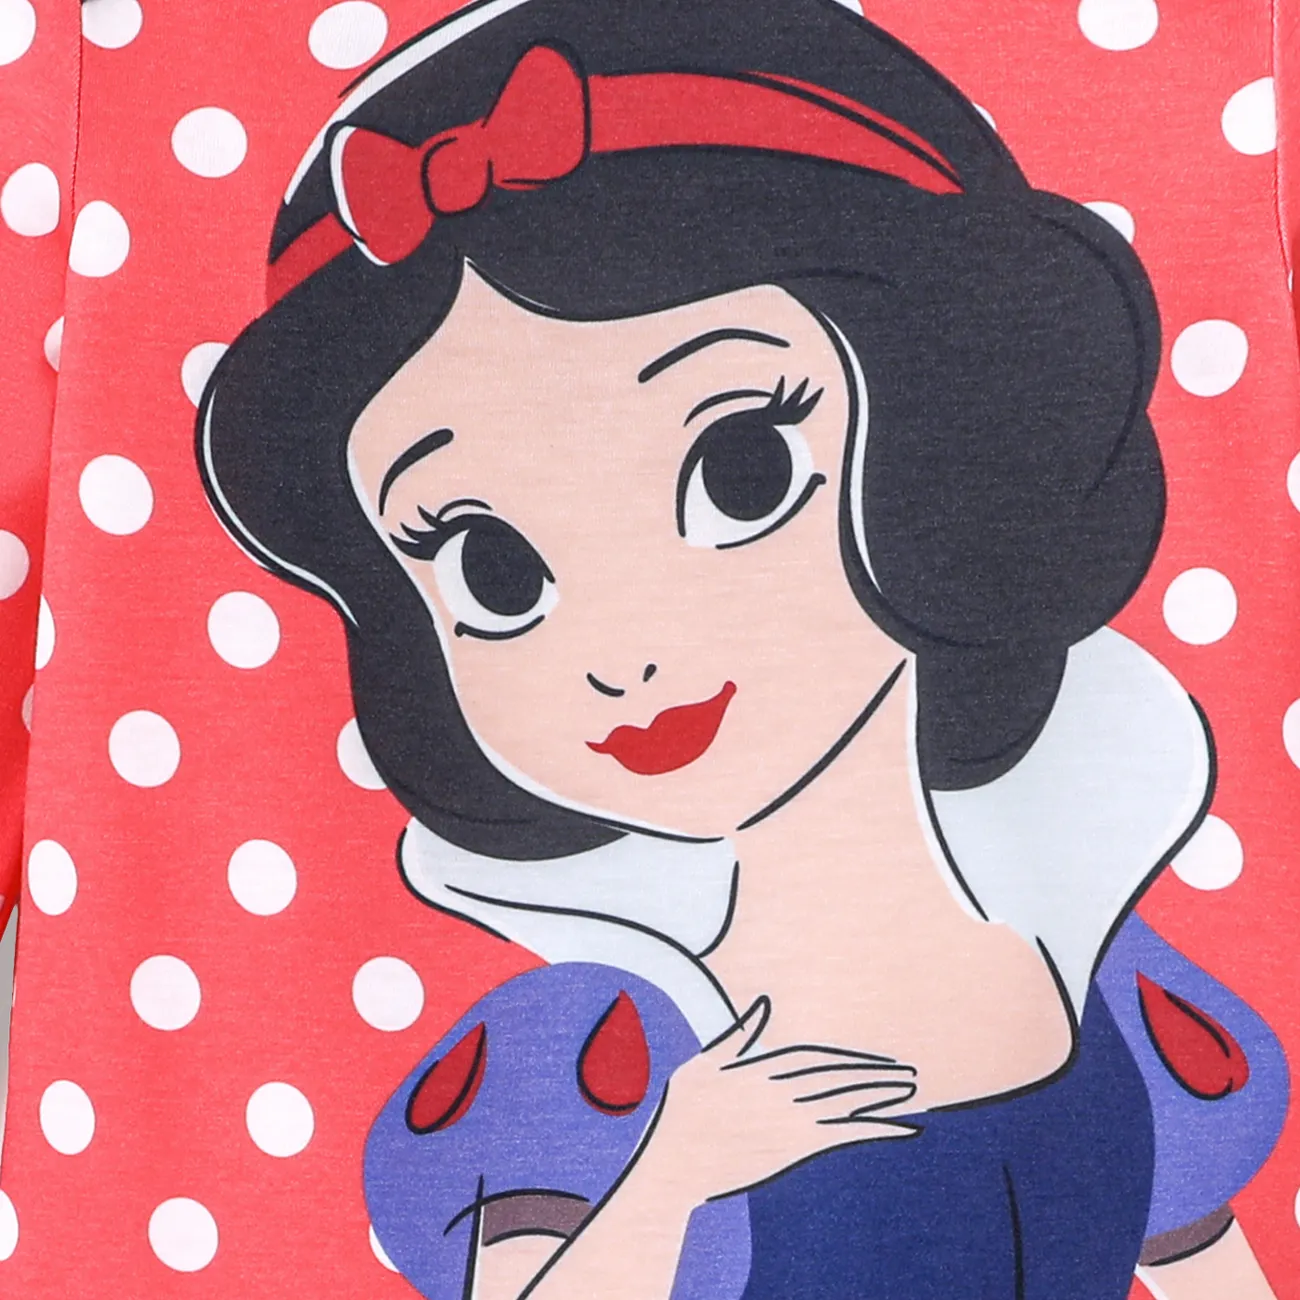 Disney Princess 嬰兒 女 童趣 長袖 長腿連身衣 紅色 big image 1